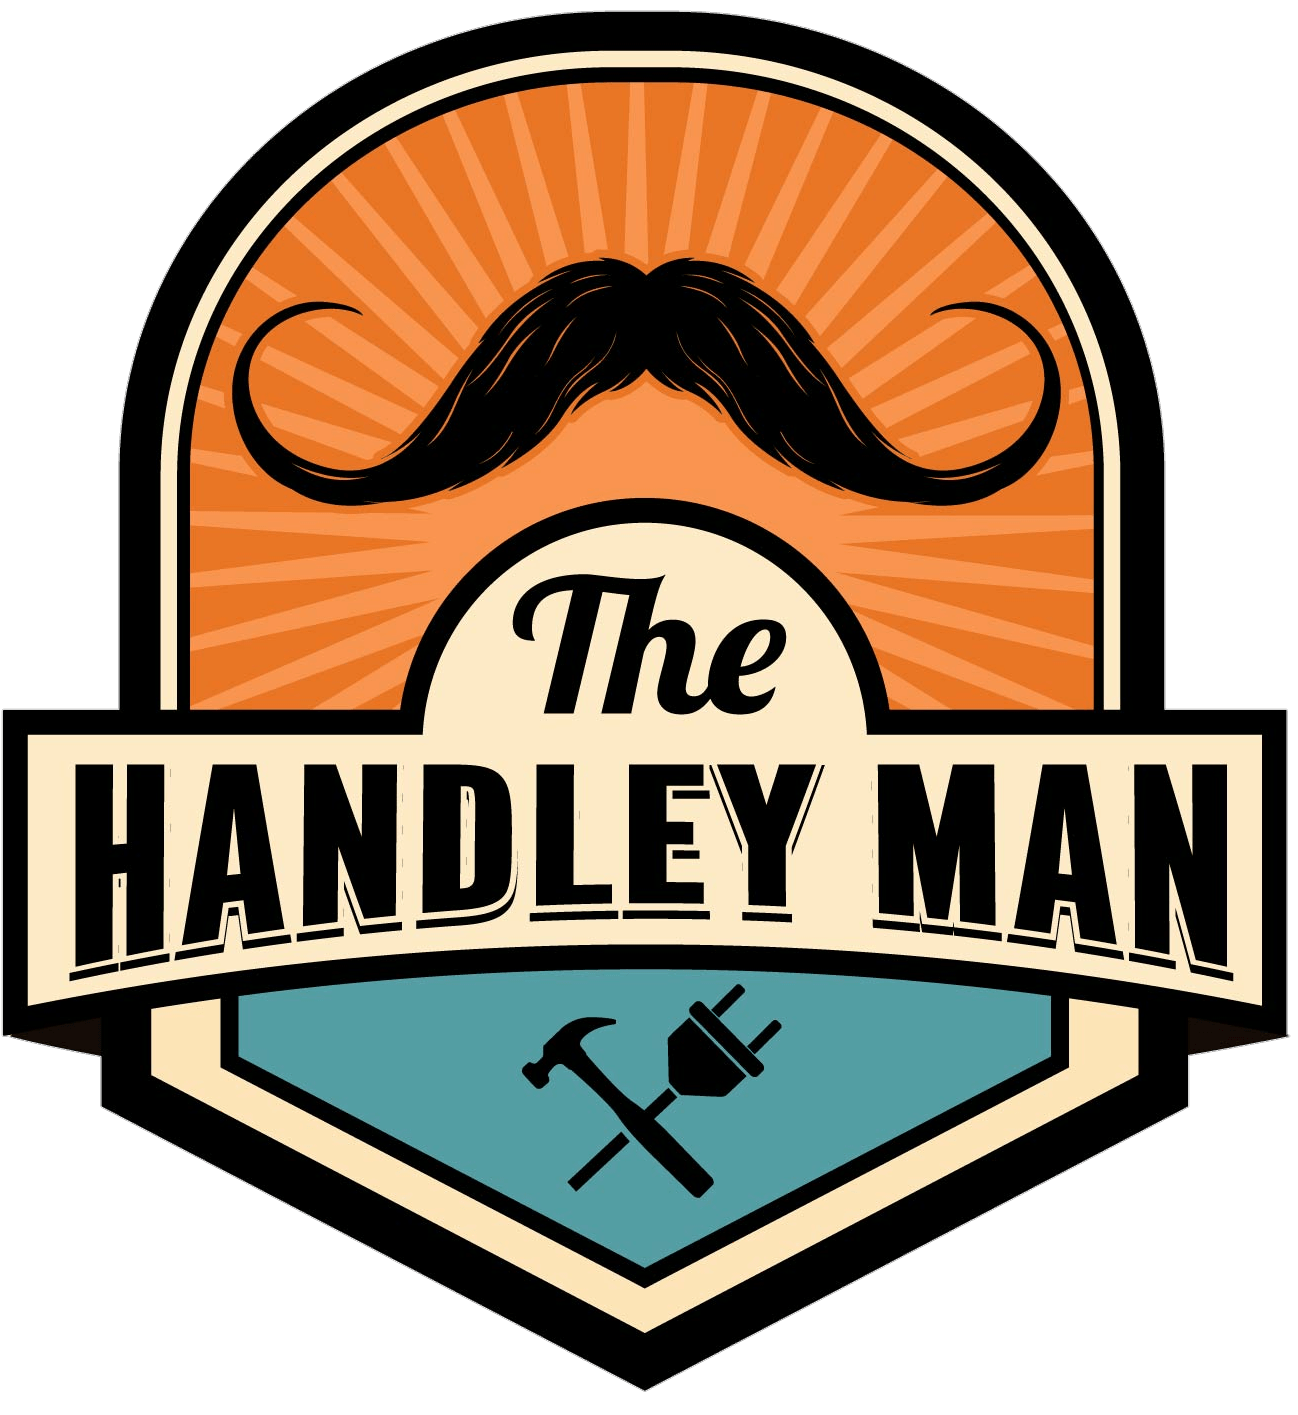 The Handley Man